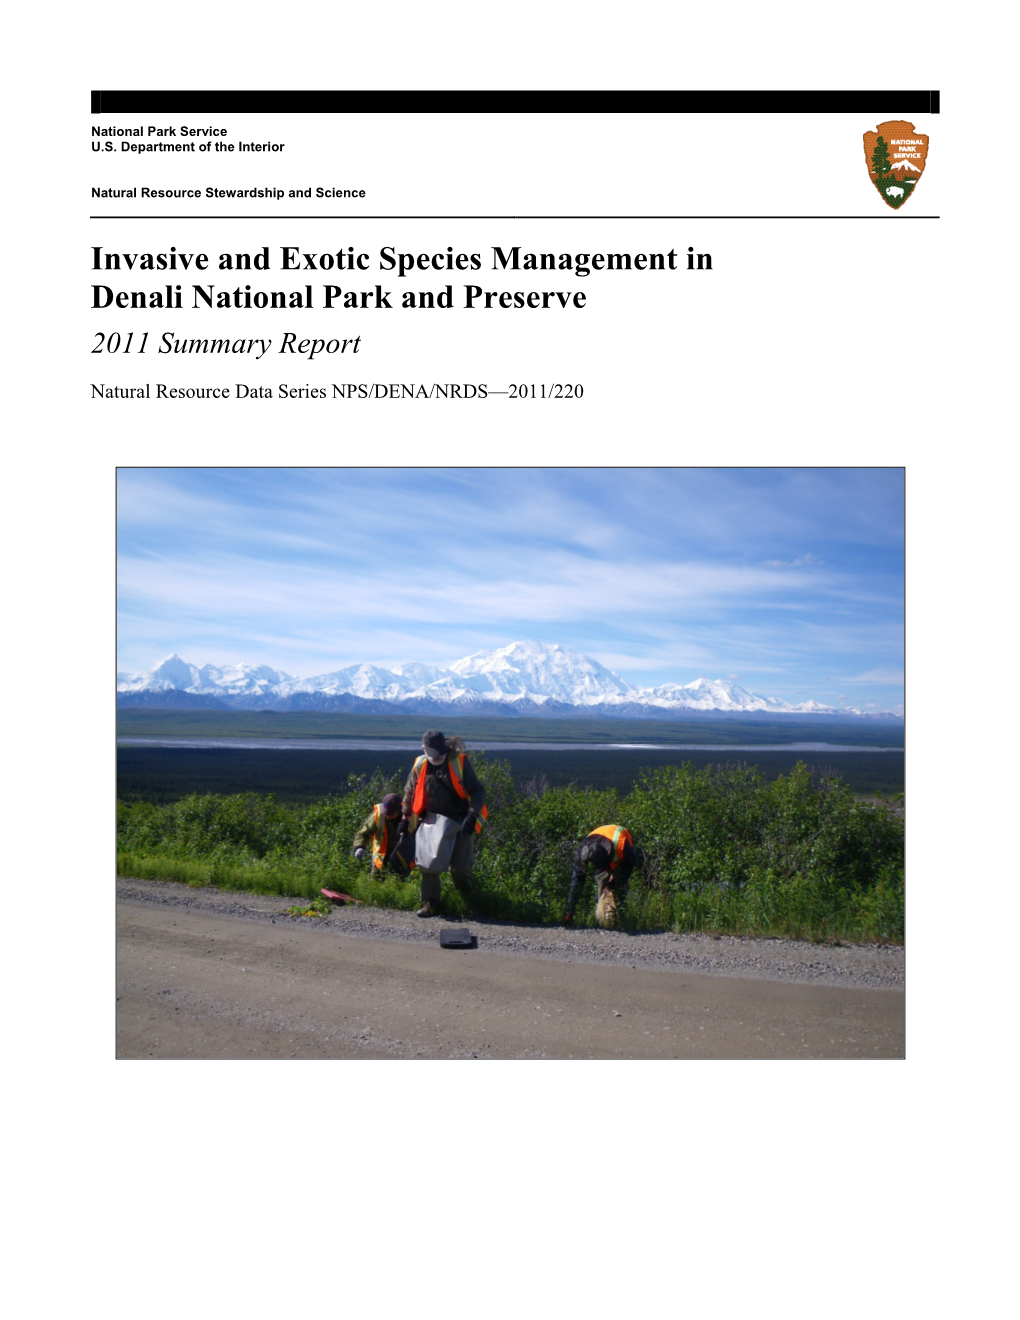 Appendix 1 - Invasive Plant Policy of Denali National Park